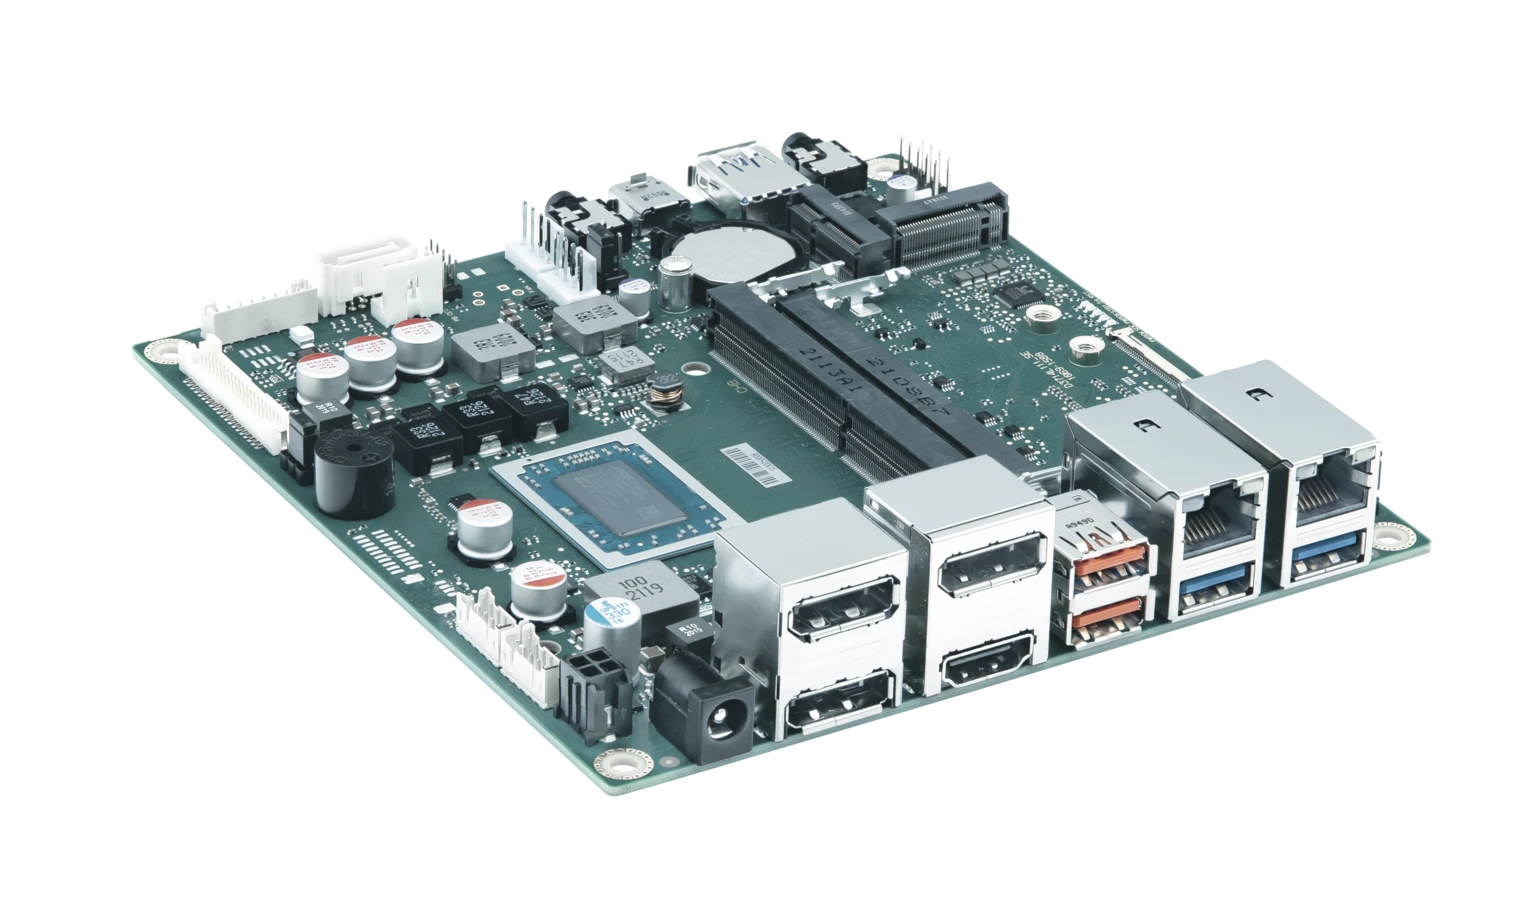 Kontron D3724-R mSTX – A Mini-STX motherboard based on Ryzen Embedded R2000 CPU